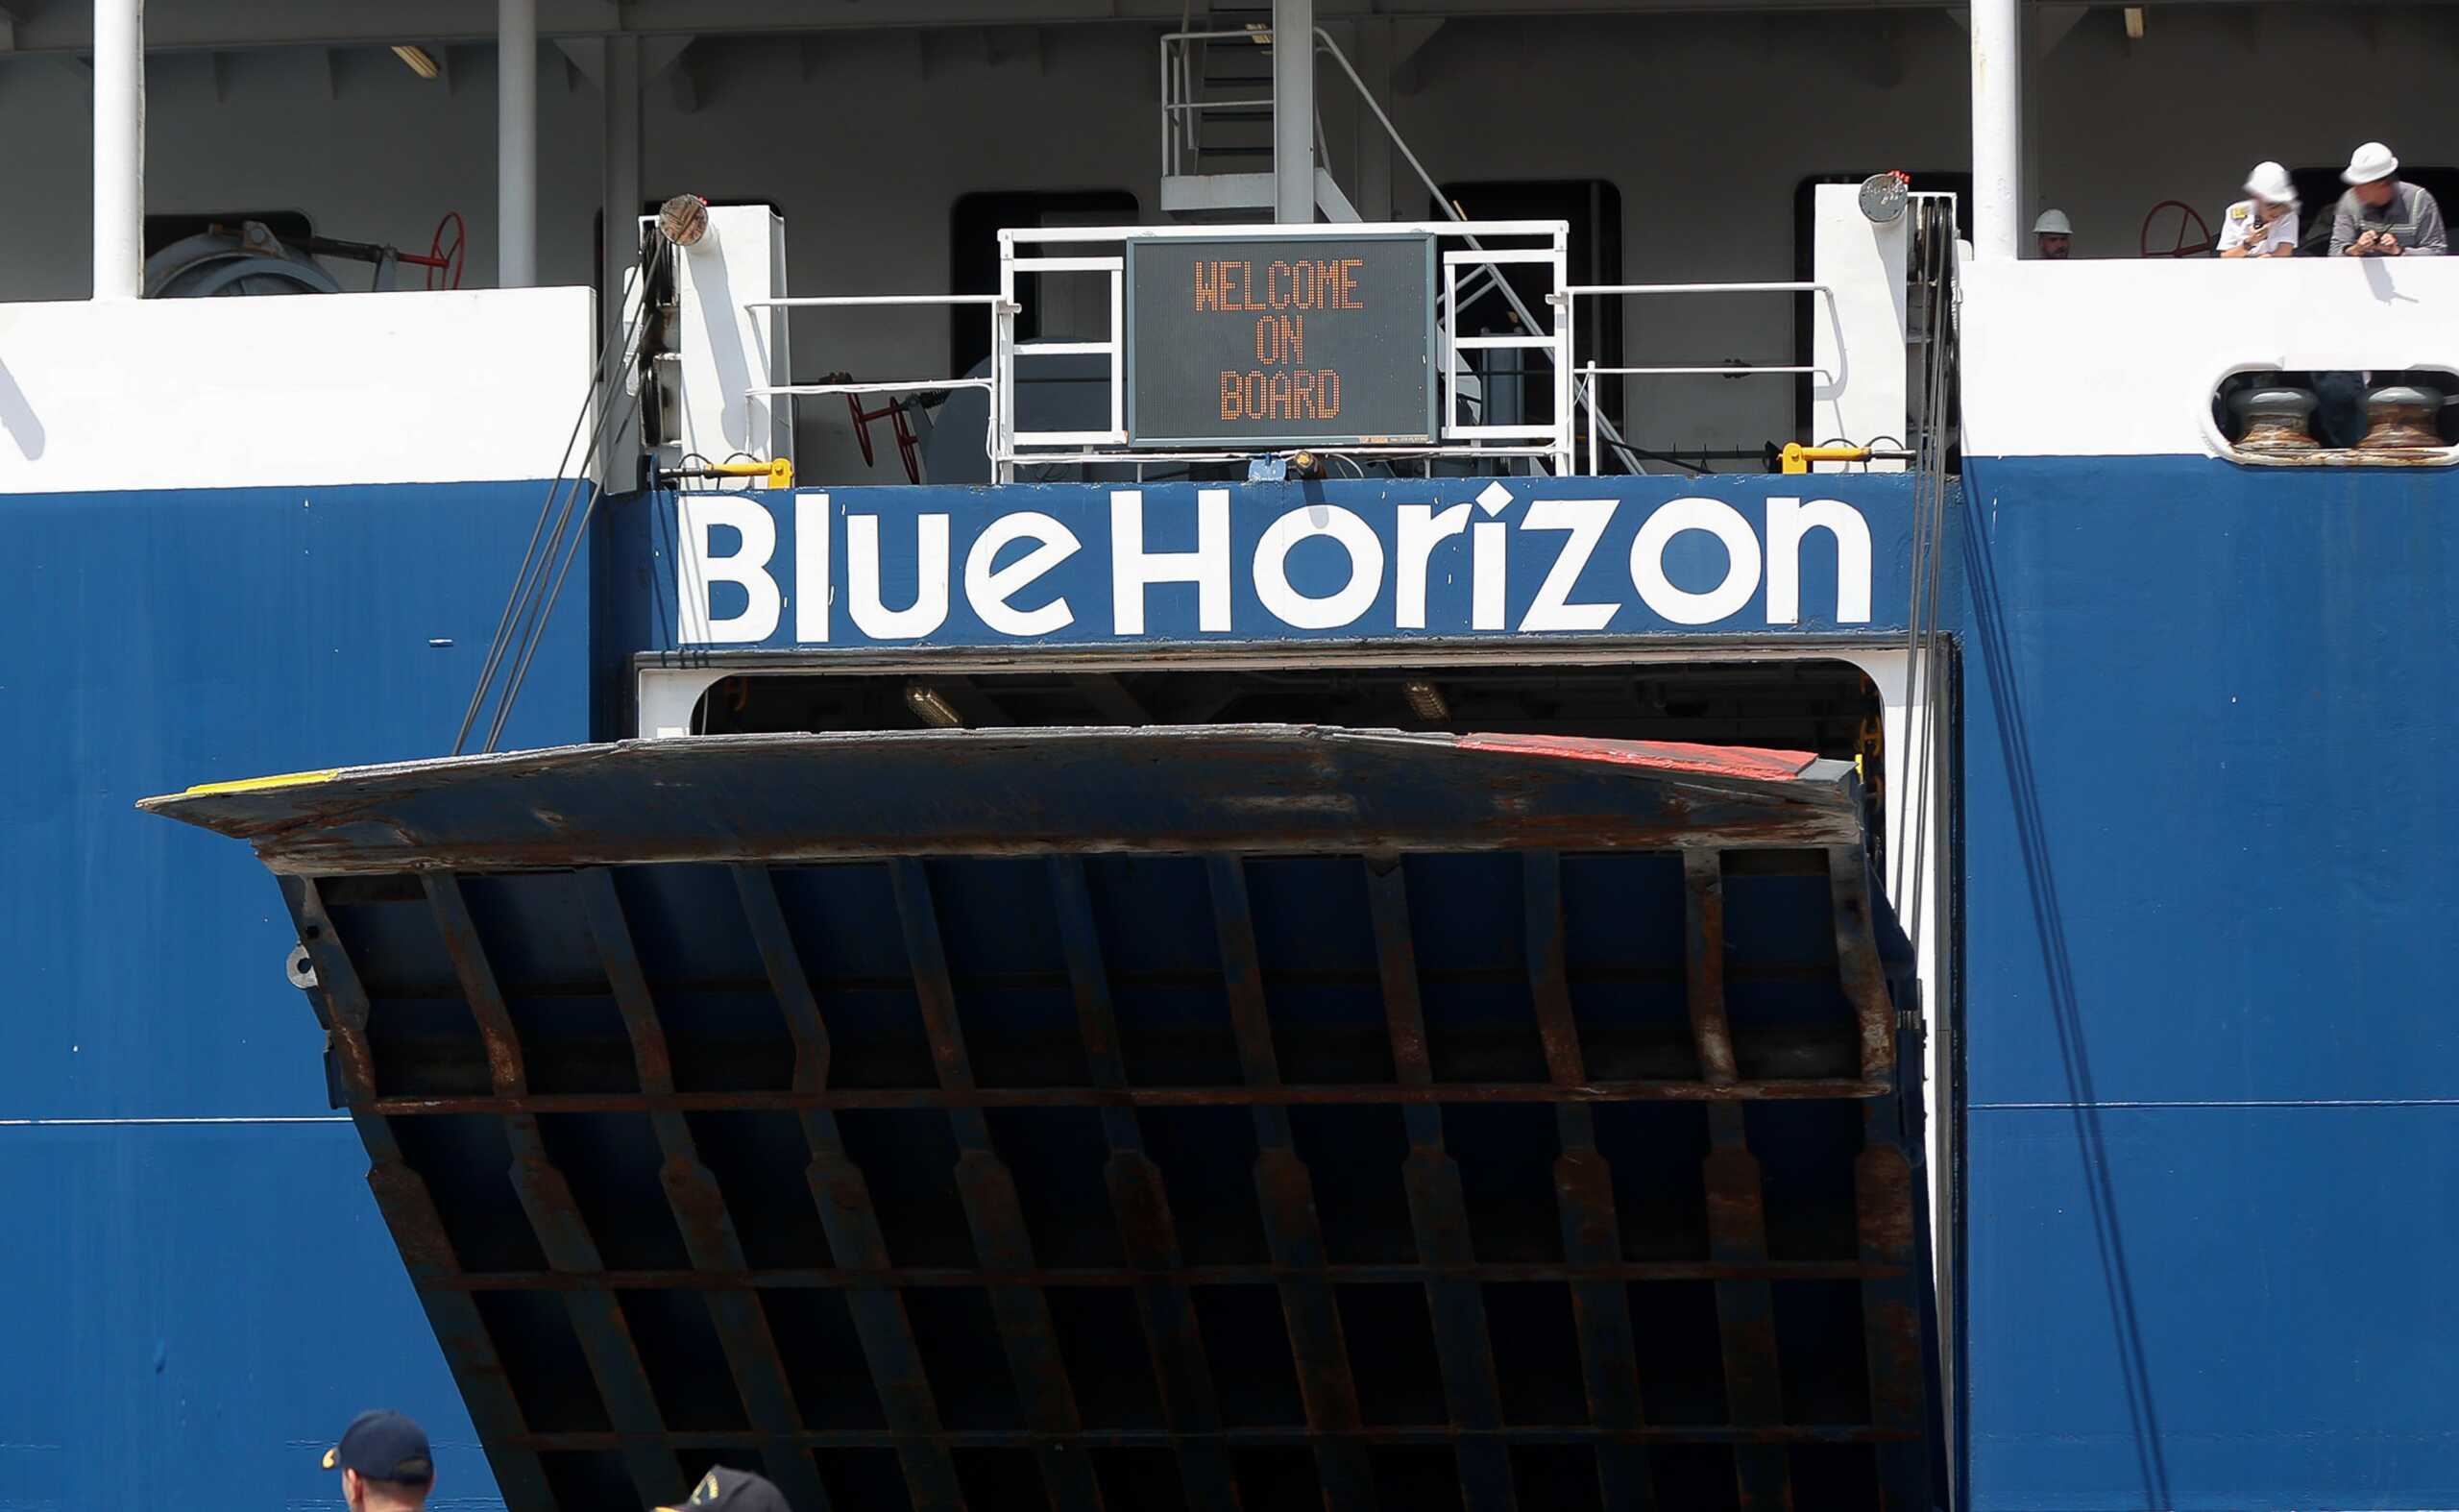 Blue Horizon: Ηχητικό ντοκουμέντο από τον διάλογο ανάμεσα στον πλοίαρχο, τον ύπαρχο και το πλήρωμα μετά τη δολοφονία του 36χρονου